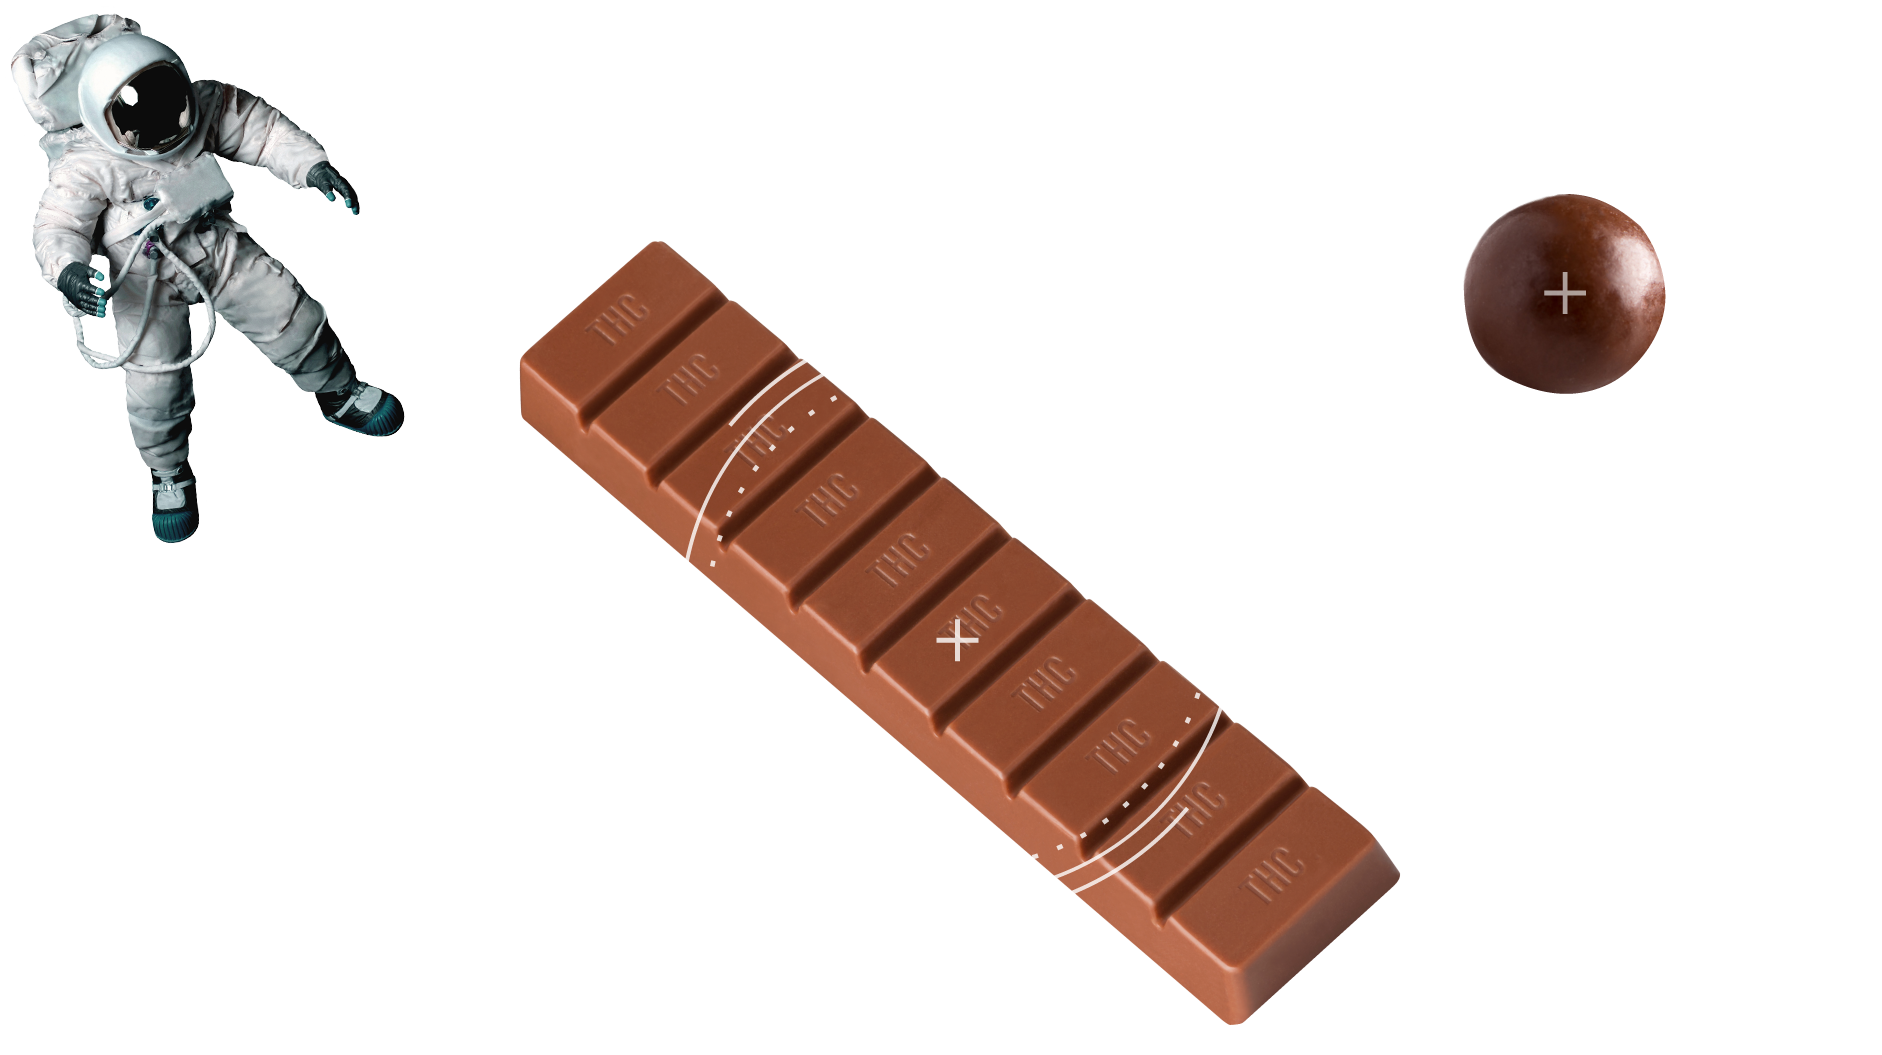 astronaut and chocolate bar